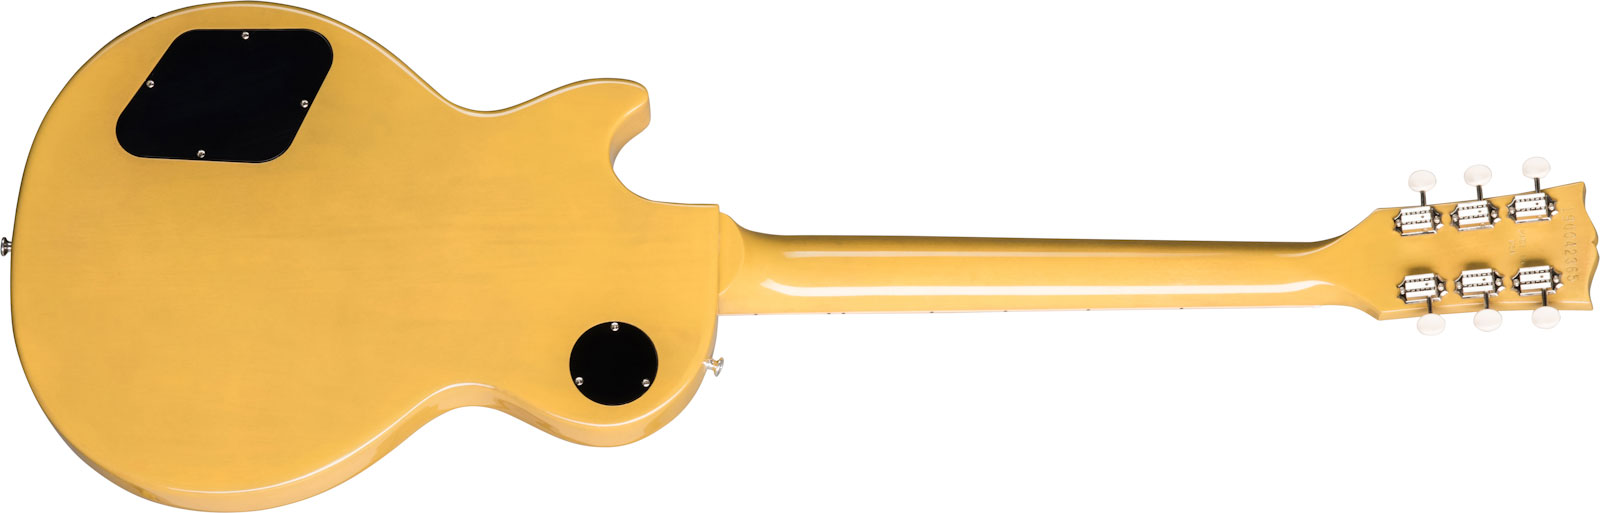 Gibson Les Paul Special Original 2p90 Ht Rw - Tv Yellow - Guitarra eléctrica de corte único. - Variation 1